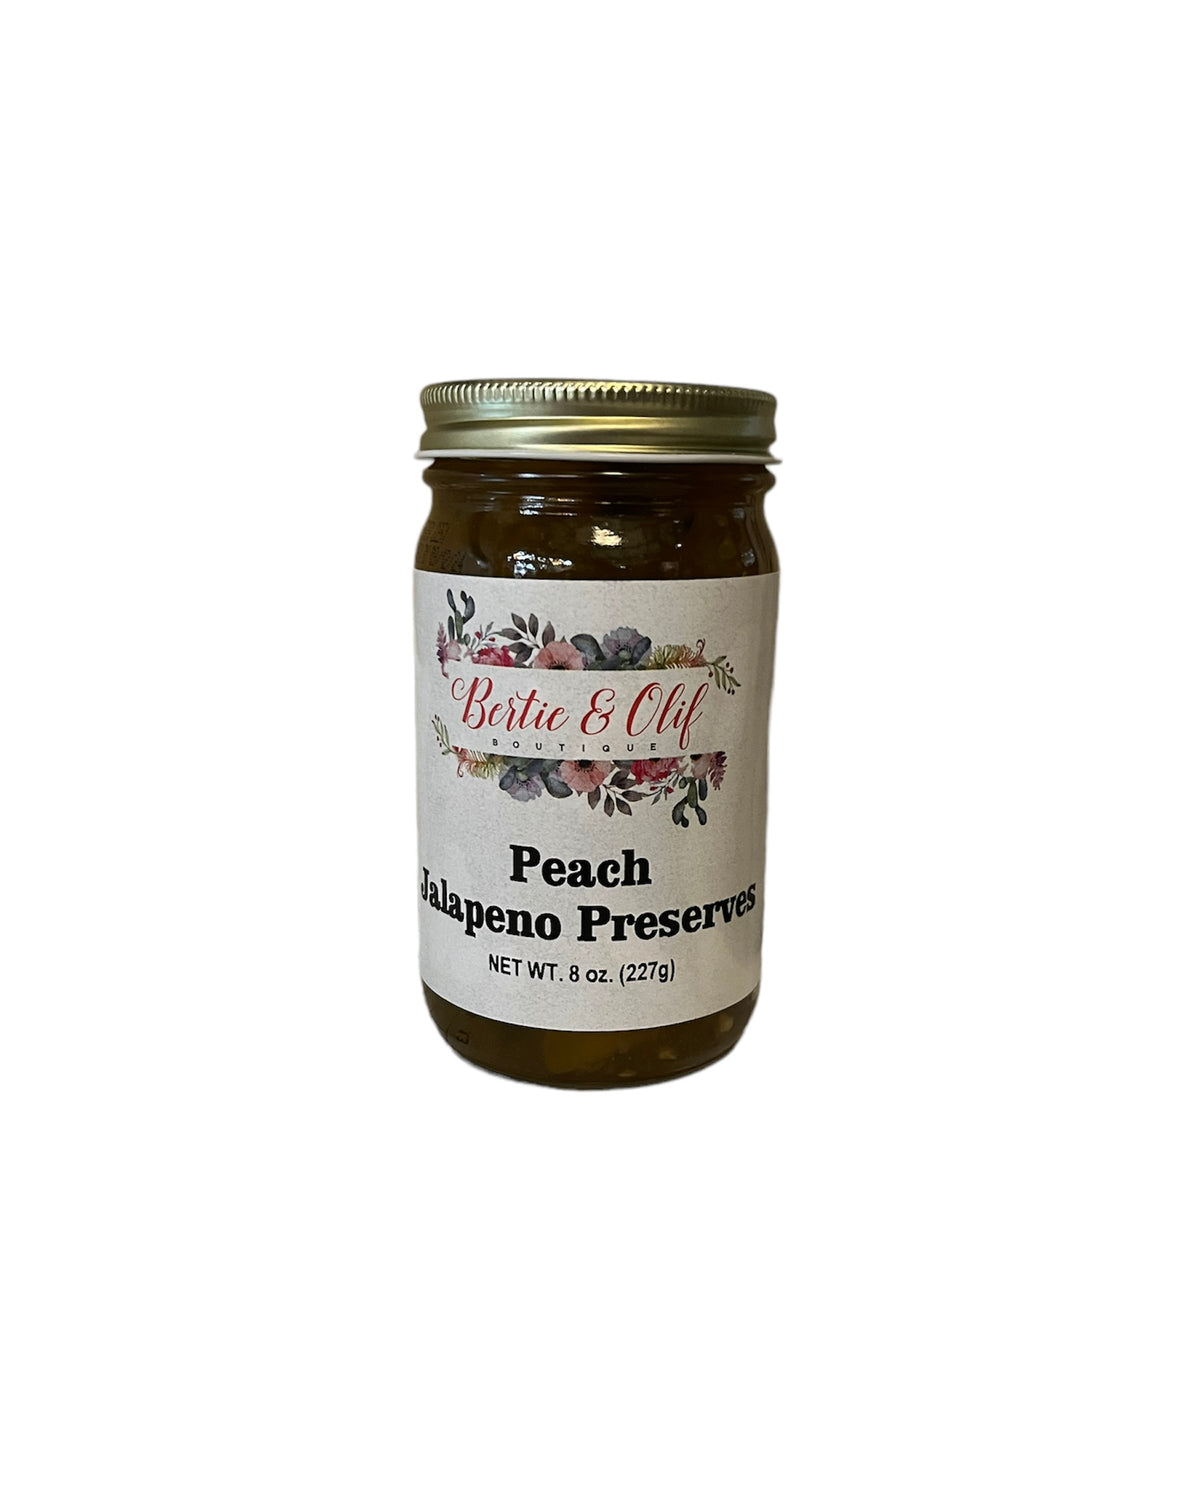 Peach Jalapeno Preserves